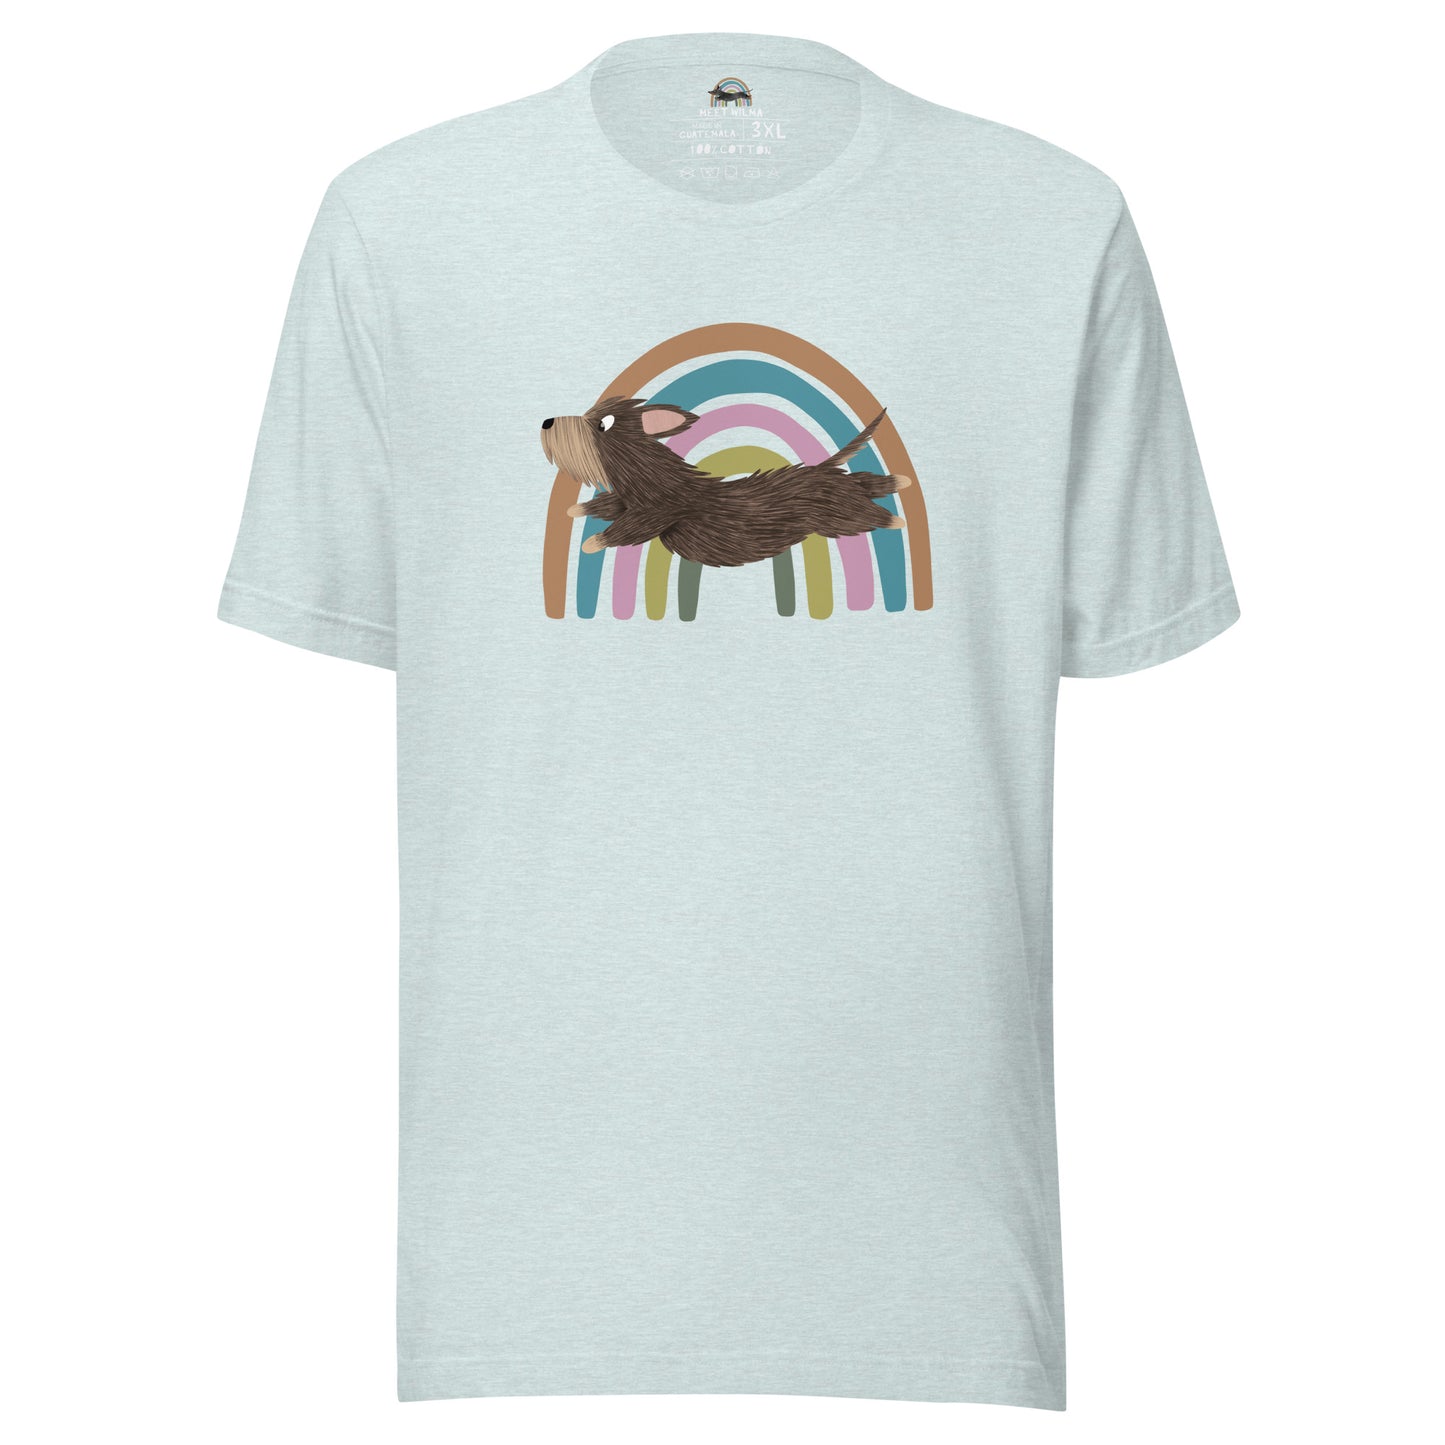 Unisex Shirt "Rainbow" Wire-Haired